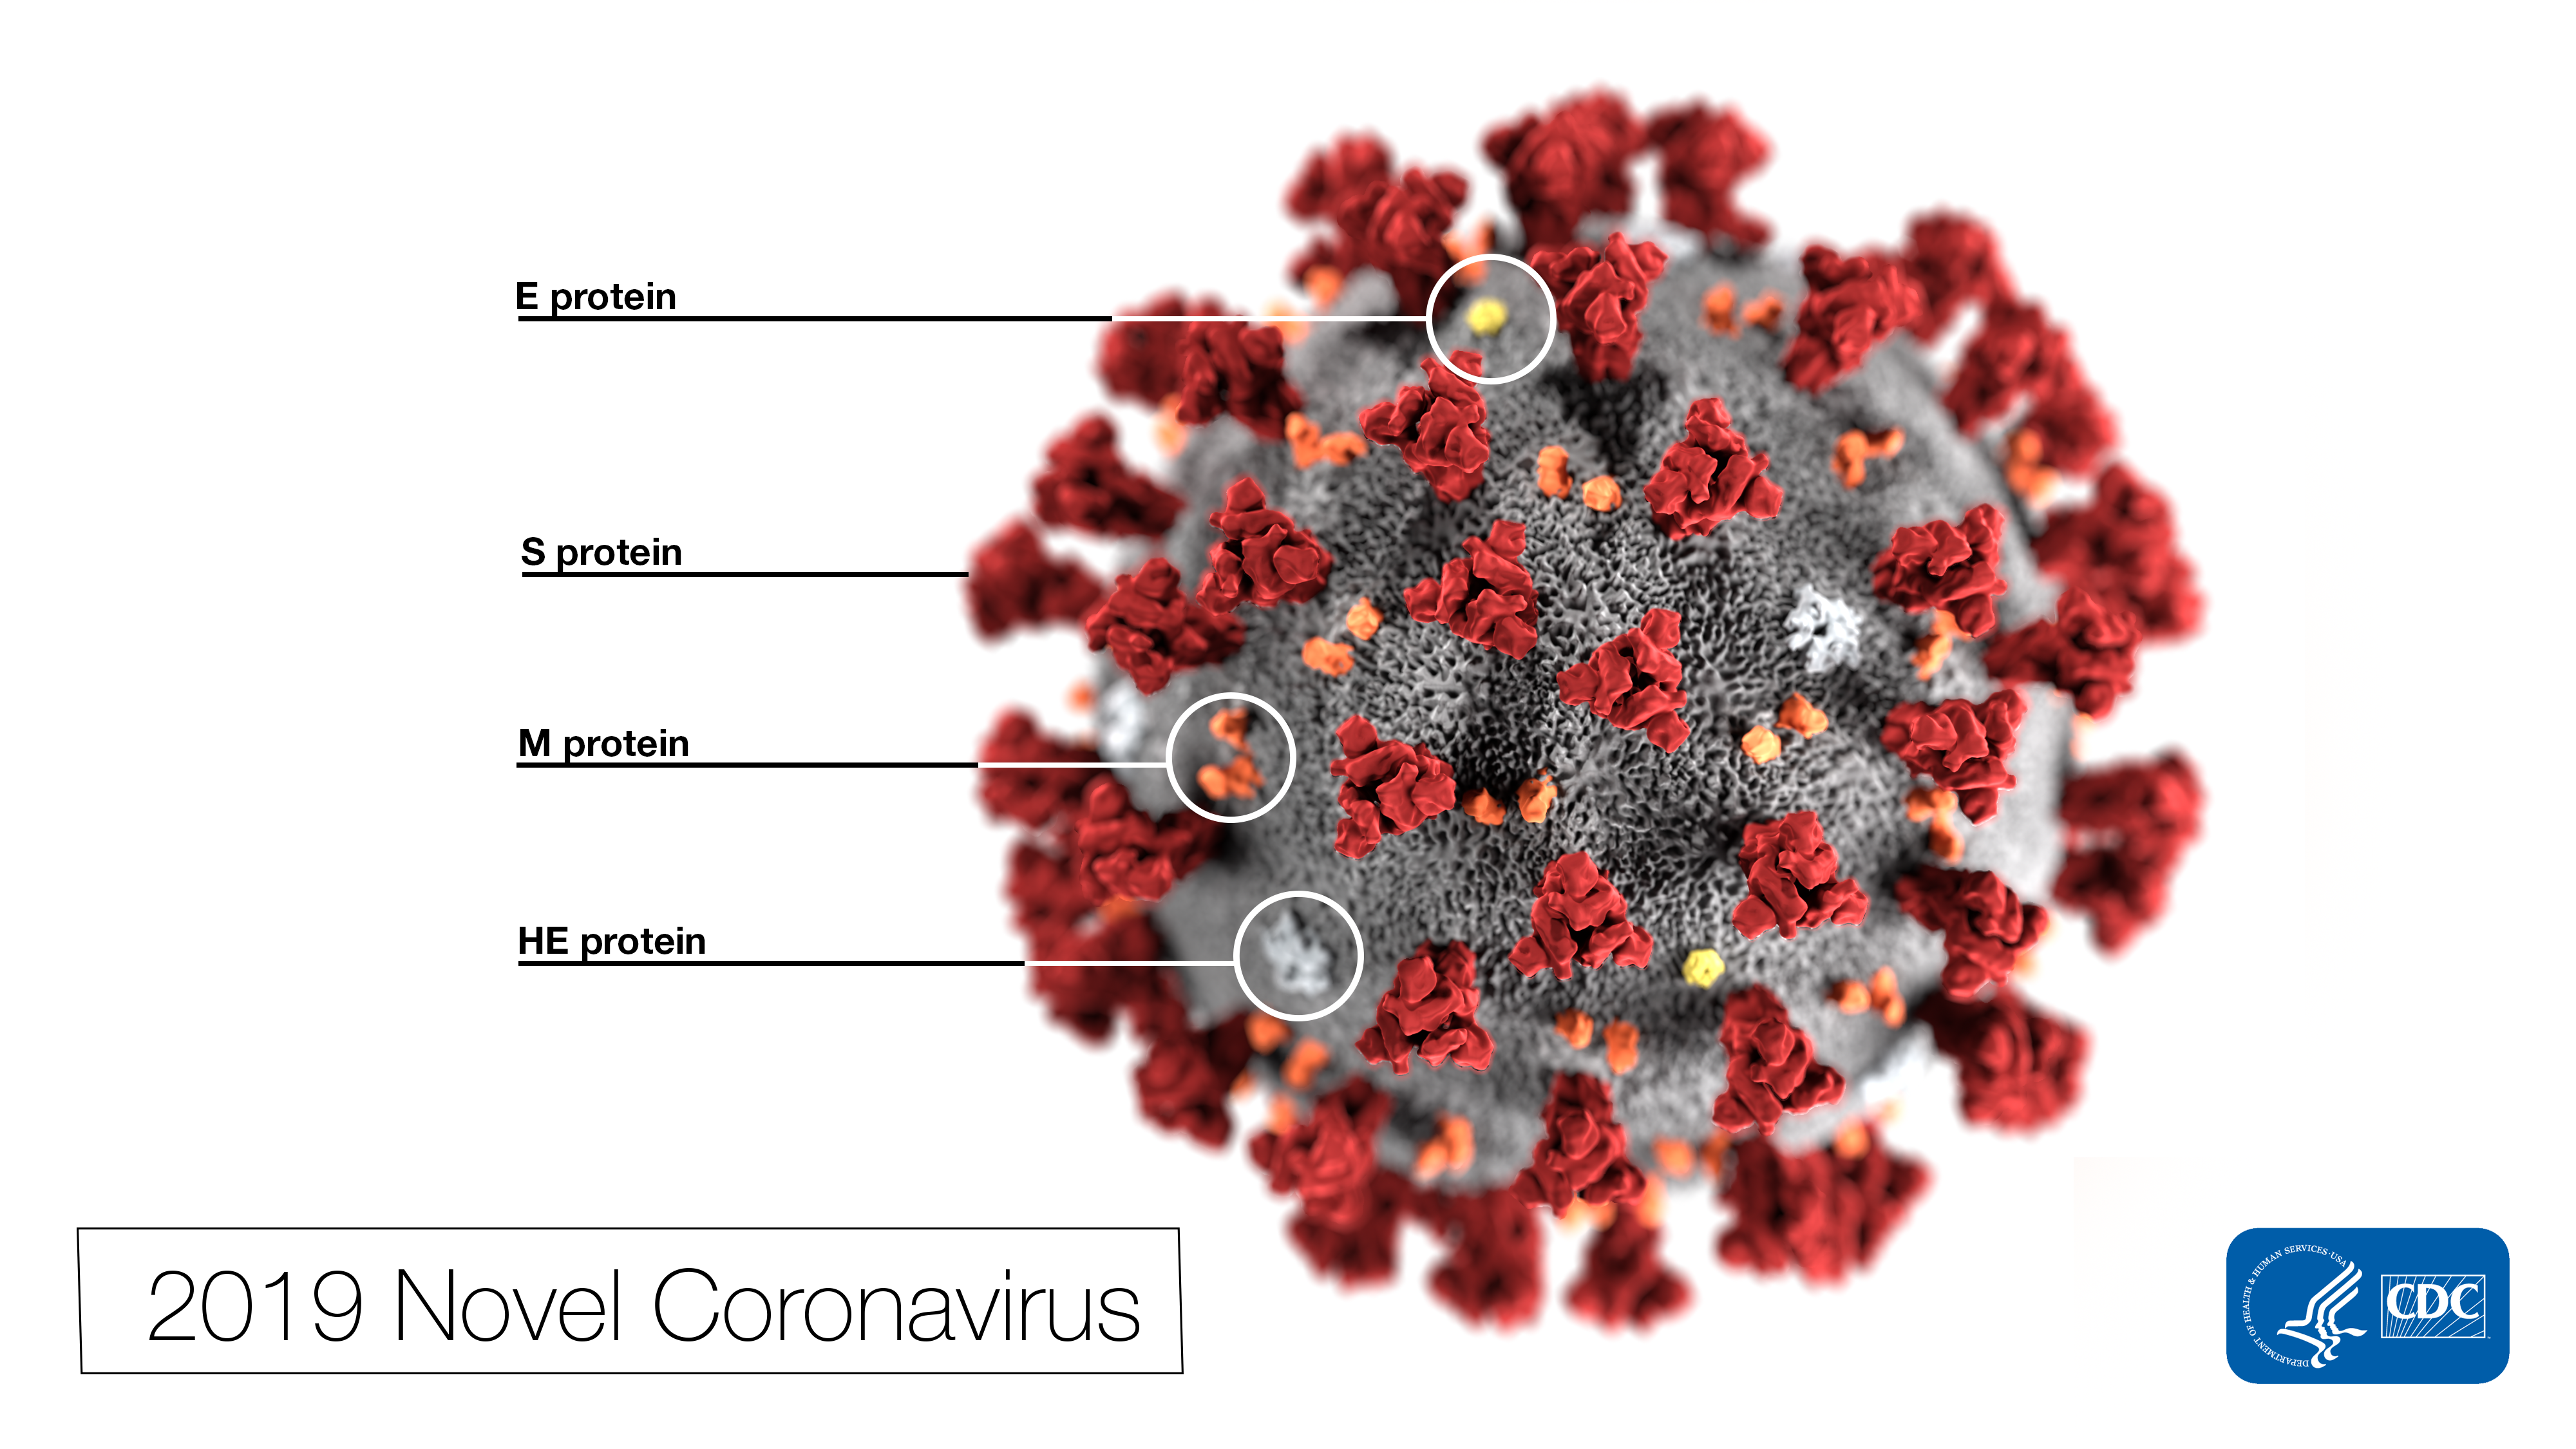 2019 Novel Coronavirus COVID-19 graphic from the CDC